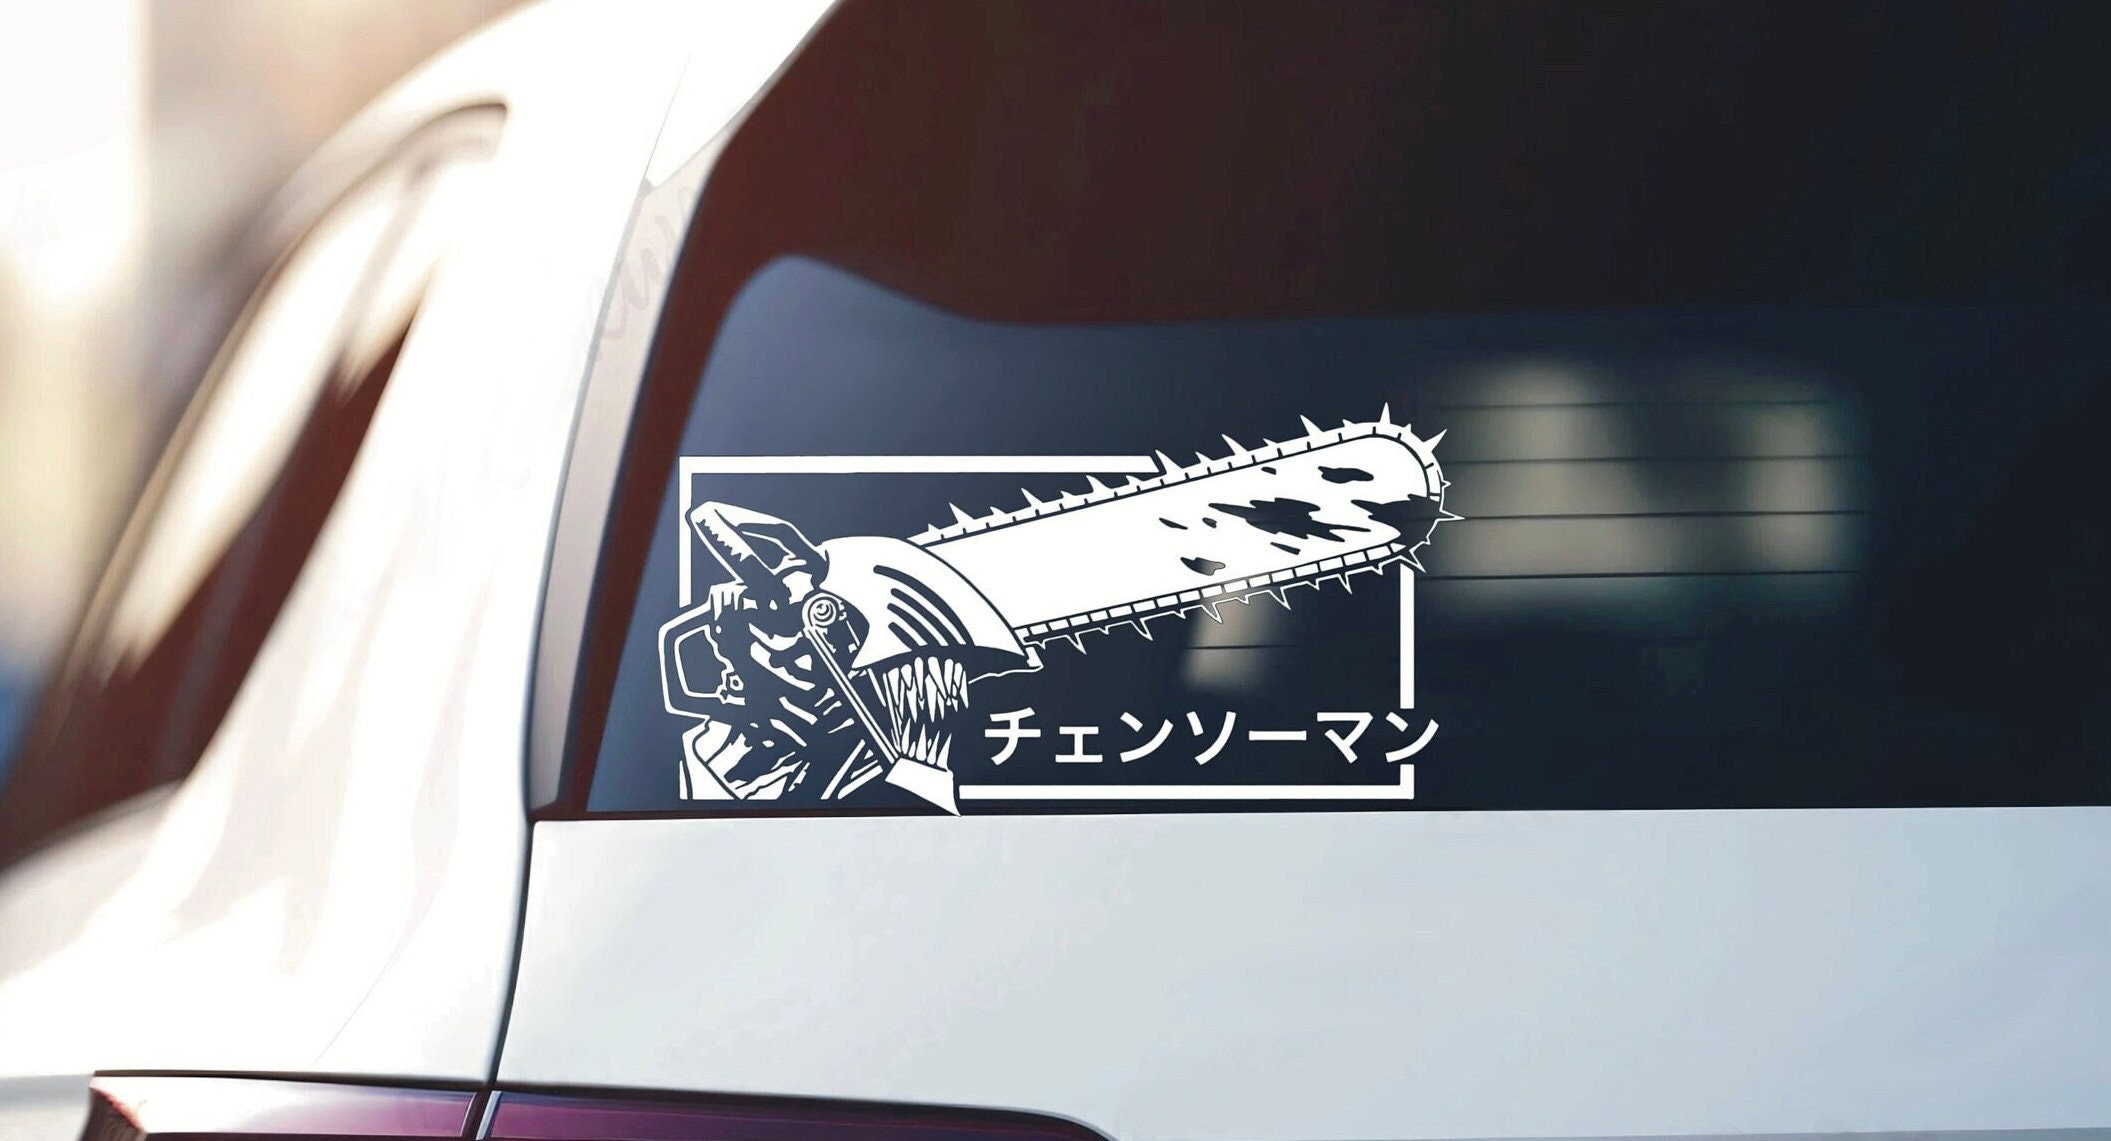 Power Chainsaw Man Anime Weatherproof Sticker 6 Car Decal